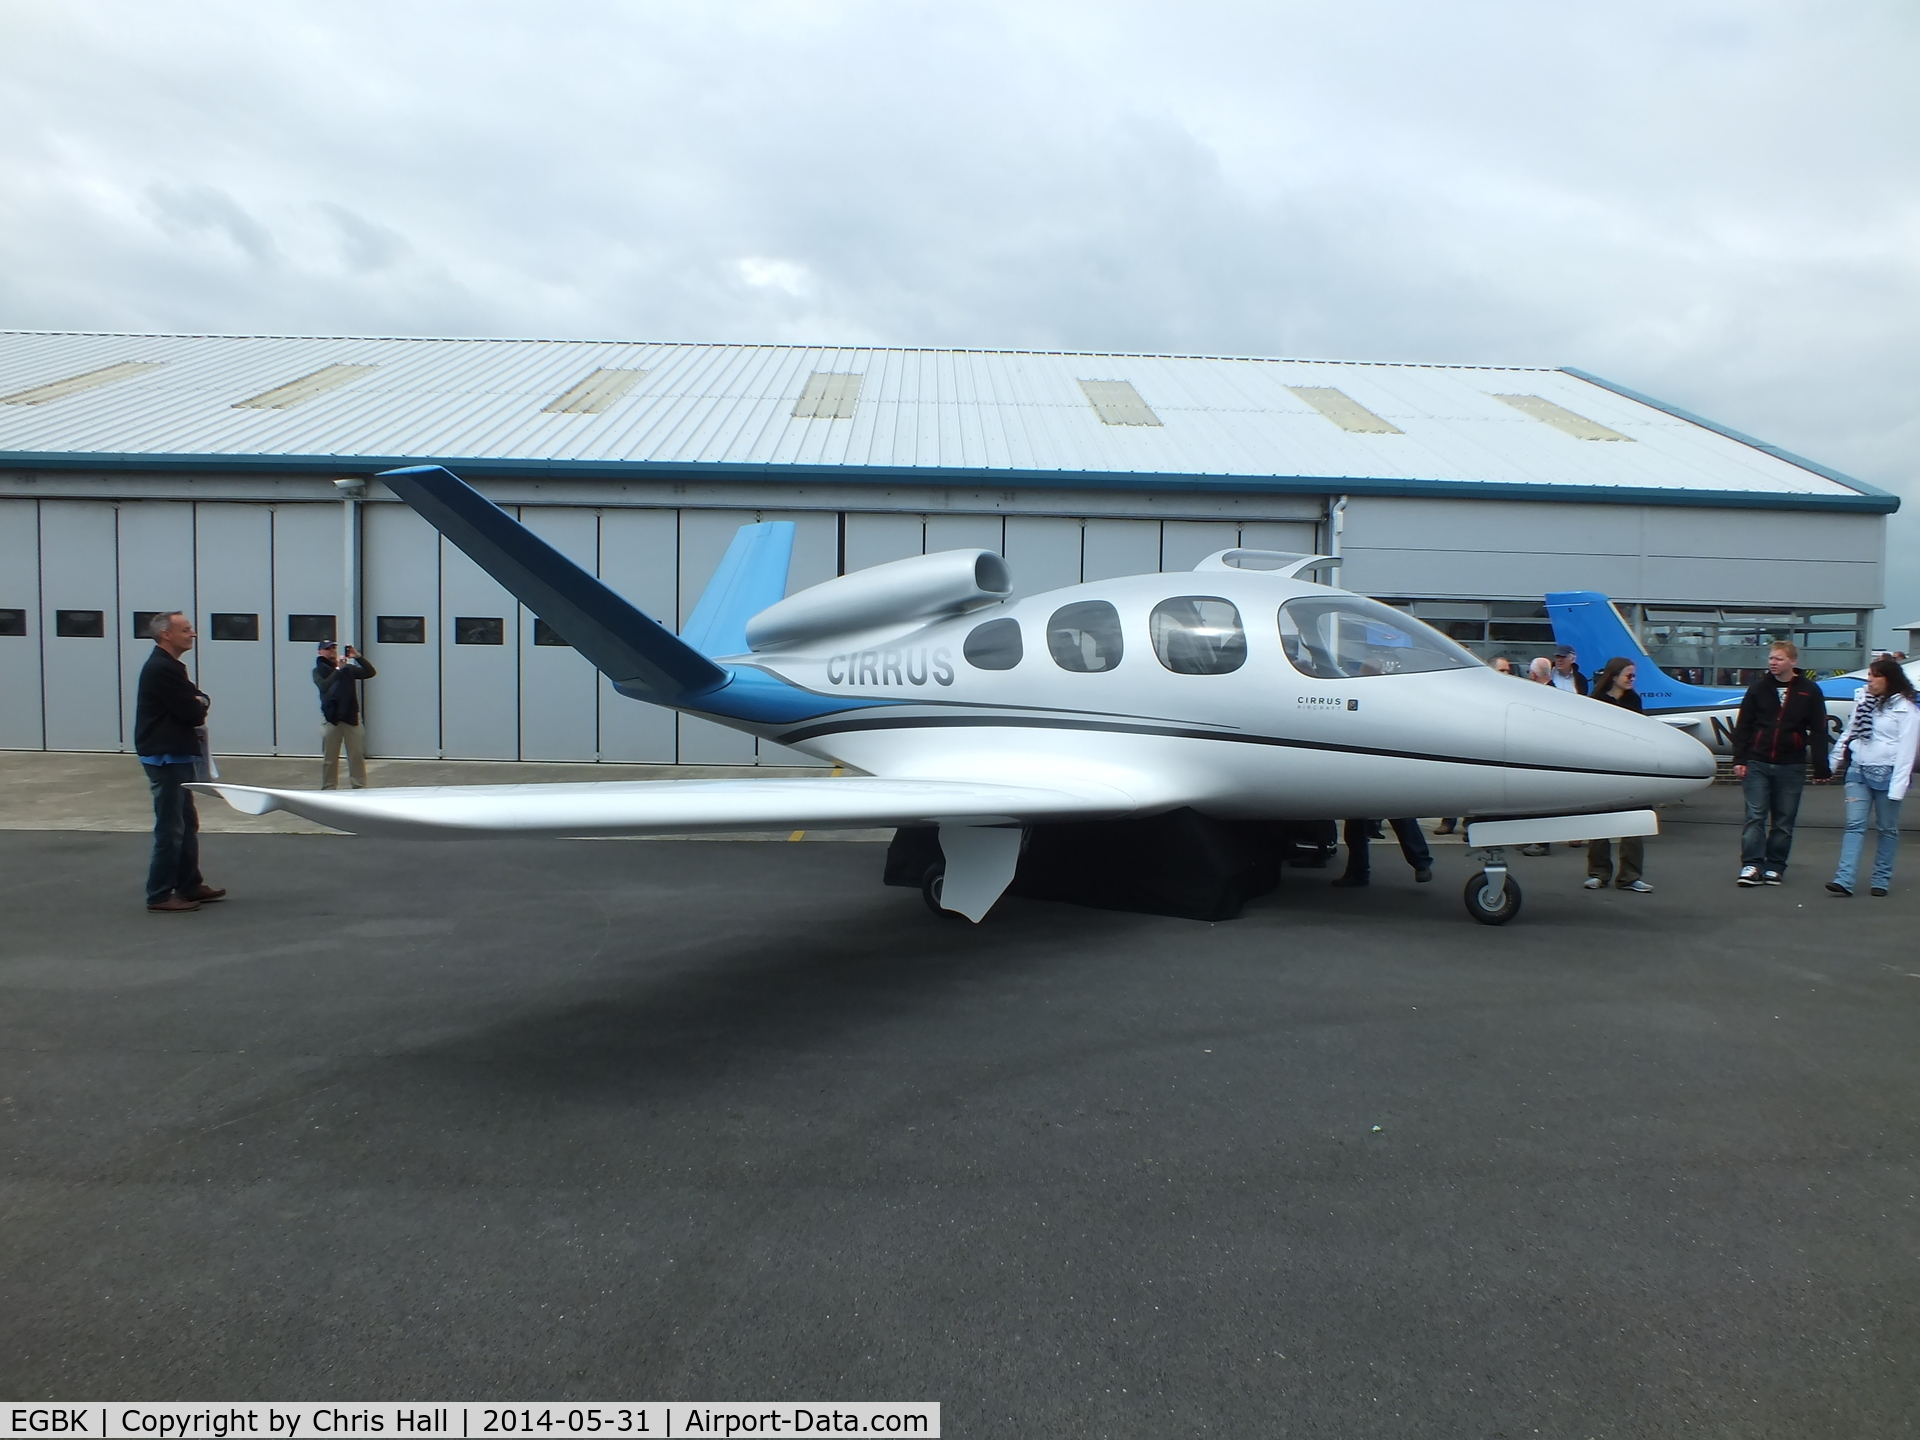 Sywell Aerodrome Airport, Northampton, England United Kingdom (EGBK) - Cirrus Vision SF50 mock up displayed at AeroExpo 2014